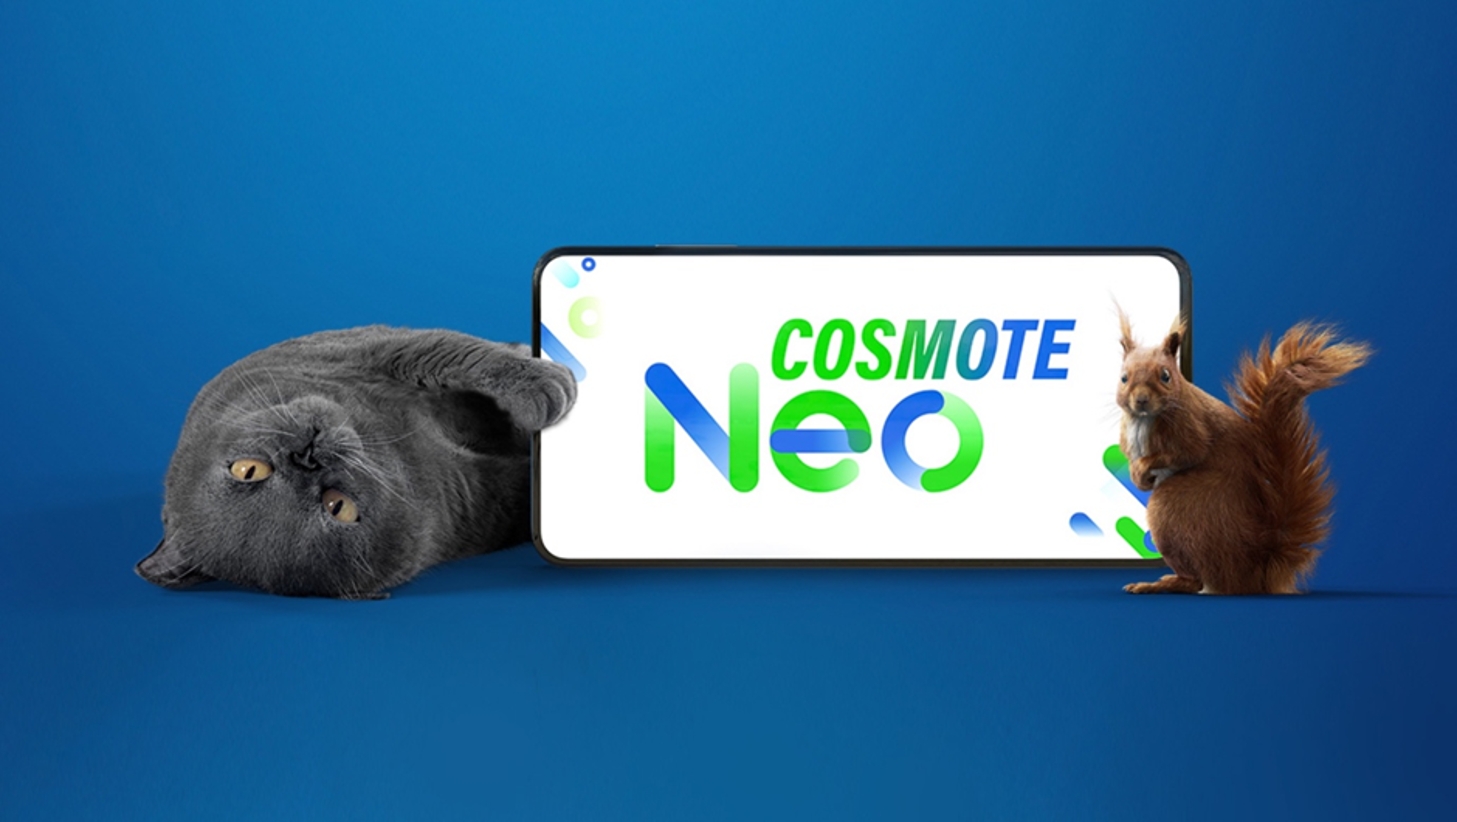 COSMOTE Neo: Το πιο ευέλικτο πρόγραμμα κινητής, τώρα με έκπτωση 50% για τους πρώτους τρεις μήνες